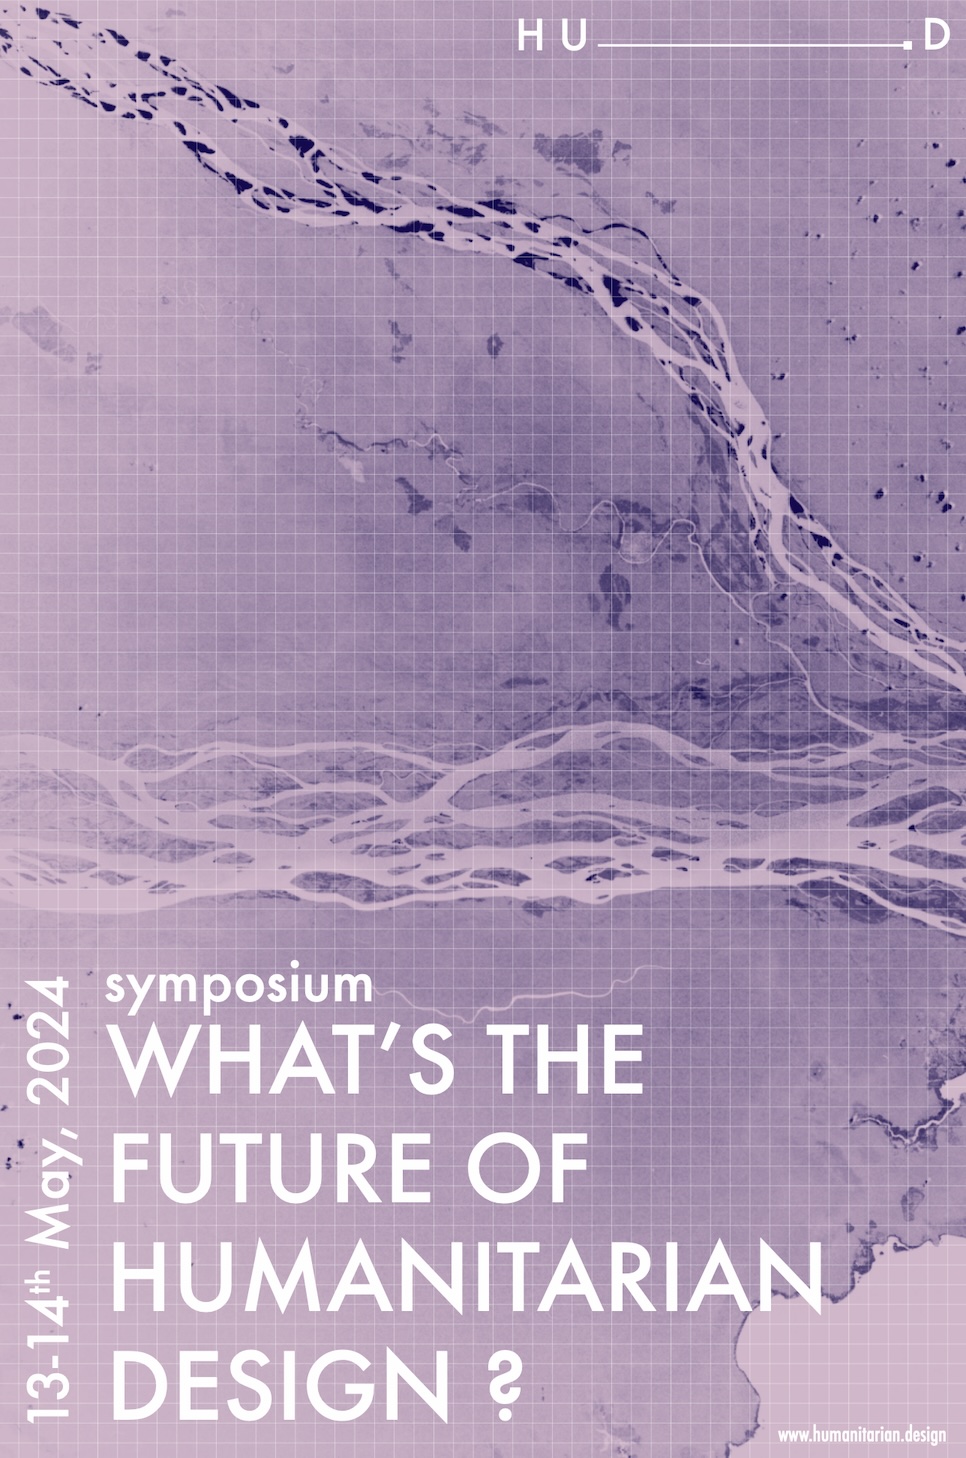 A symposium on humanitarian design futures